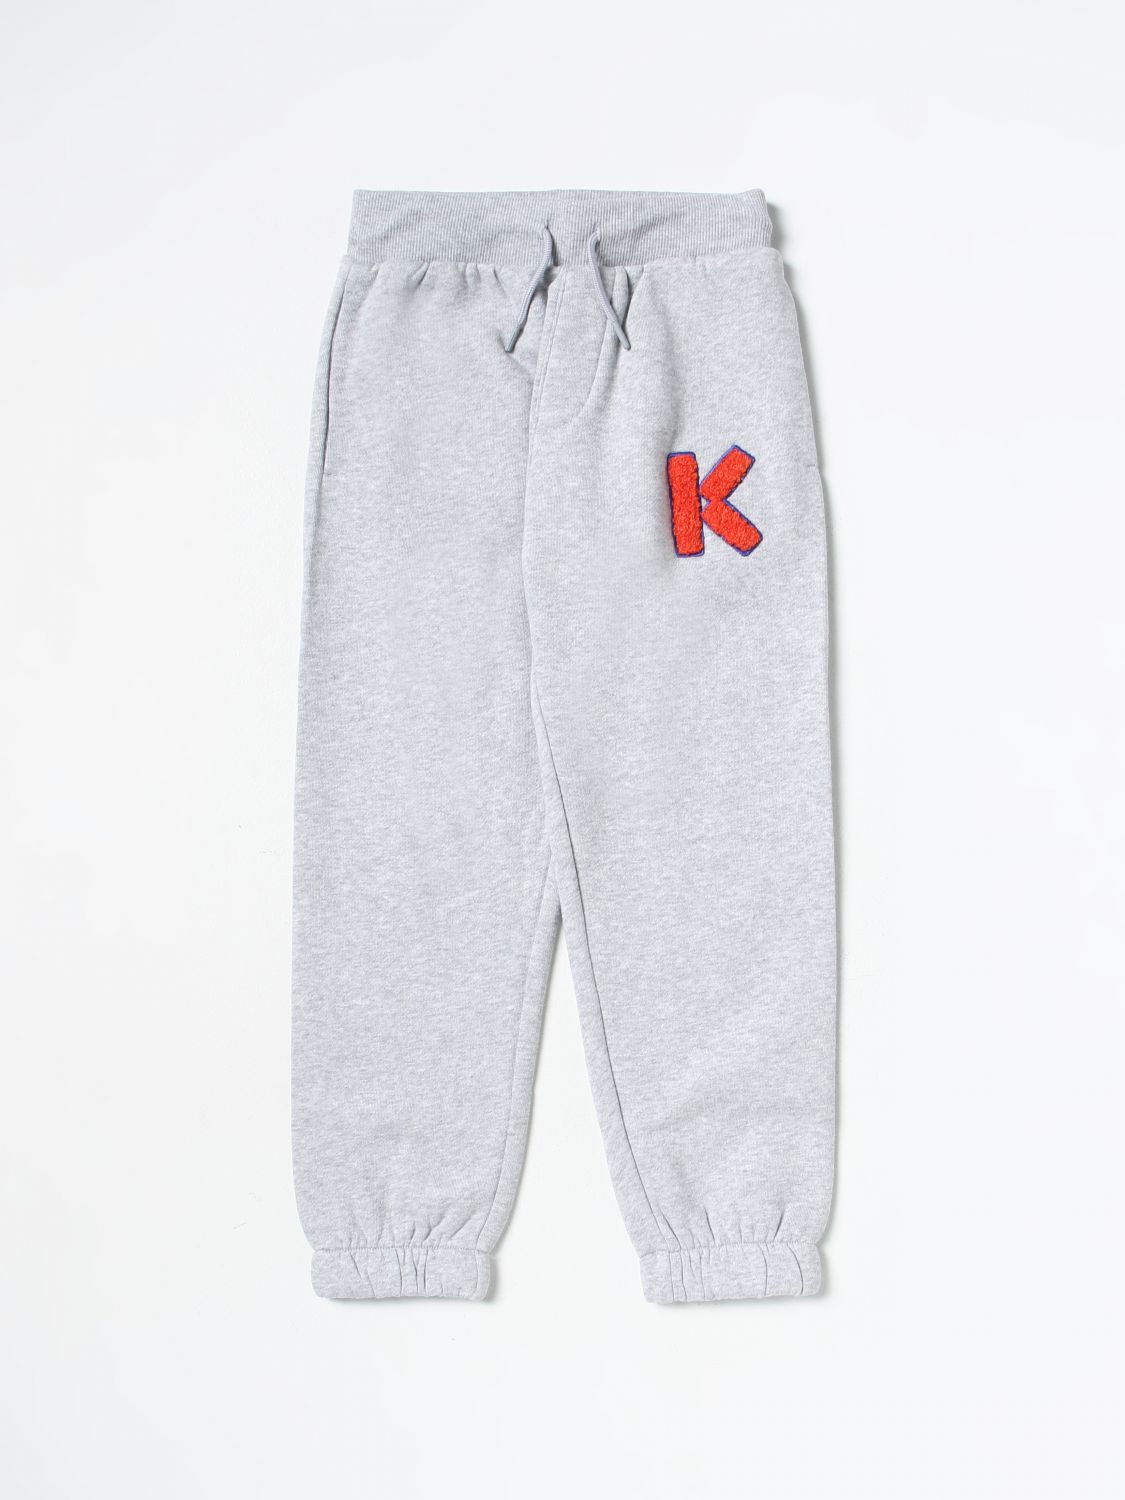 Kenzo Pants  Kids Kids Color Grey